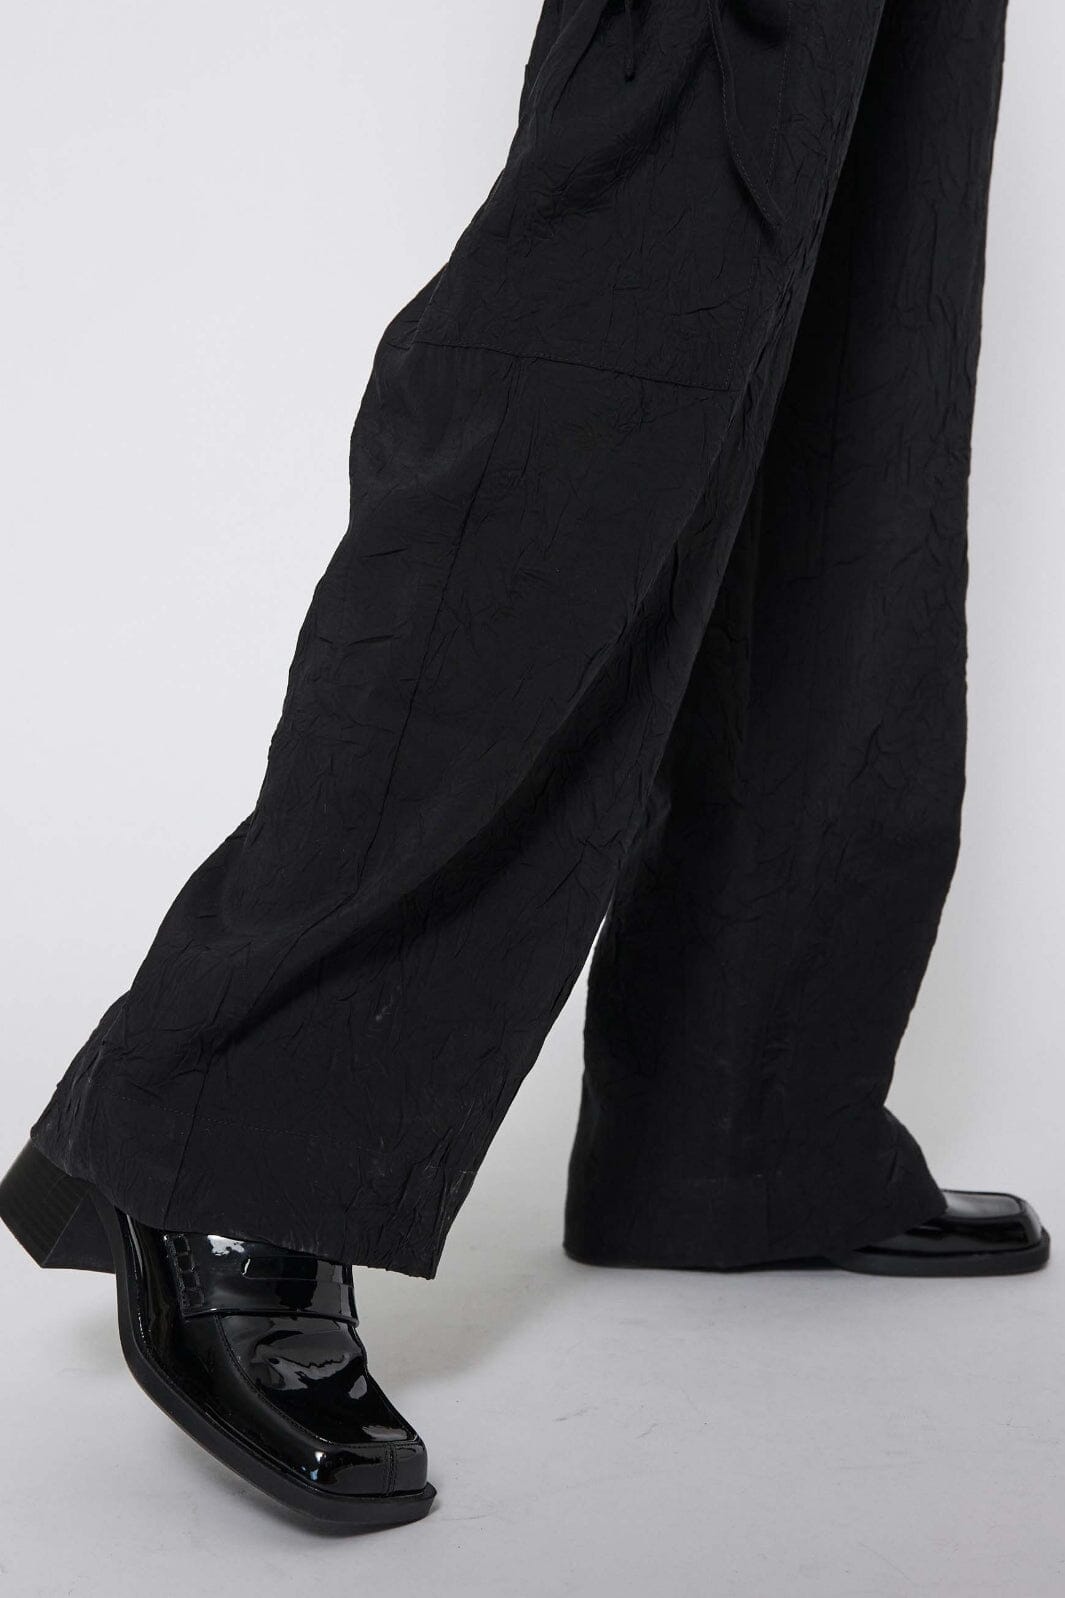 NORR - Moa Pants - Black Bukser 